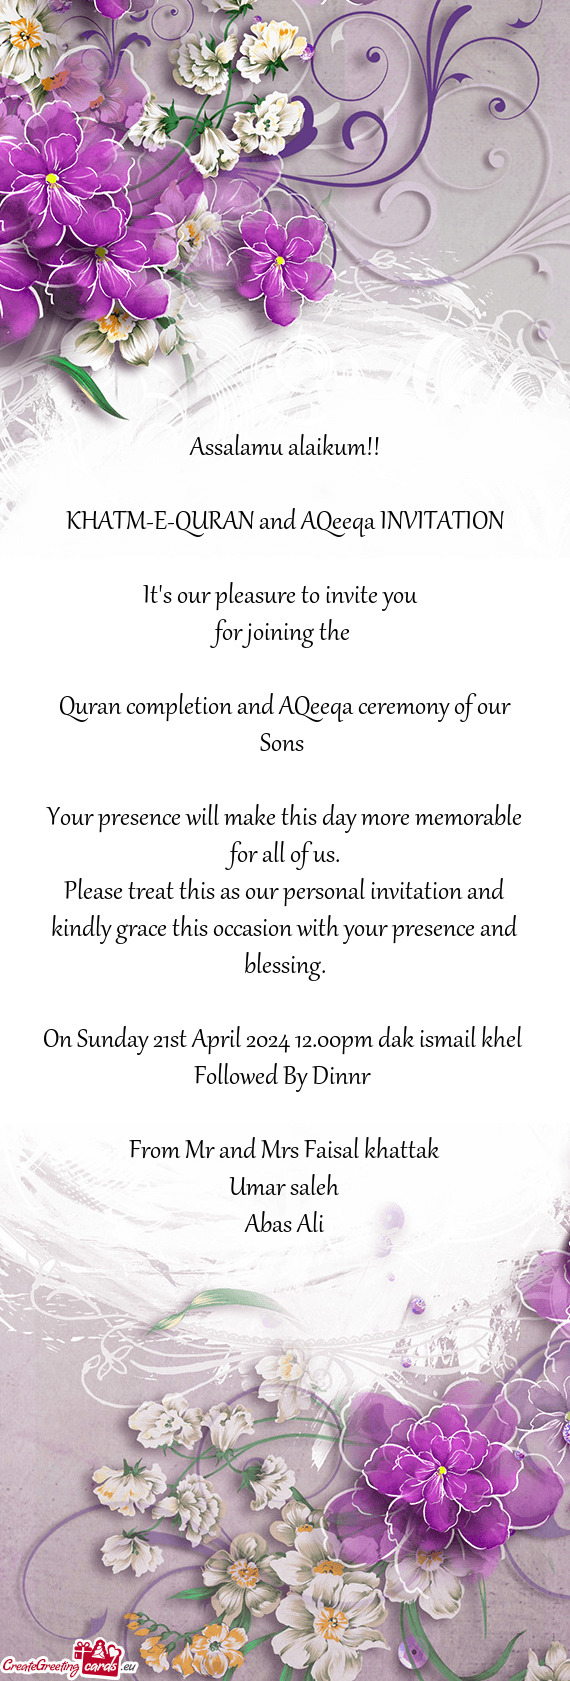 KHATM-E-QURAN and AQeeqa INVITATION